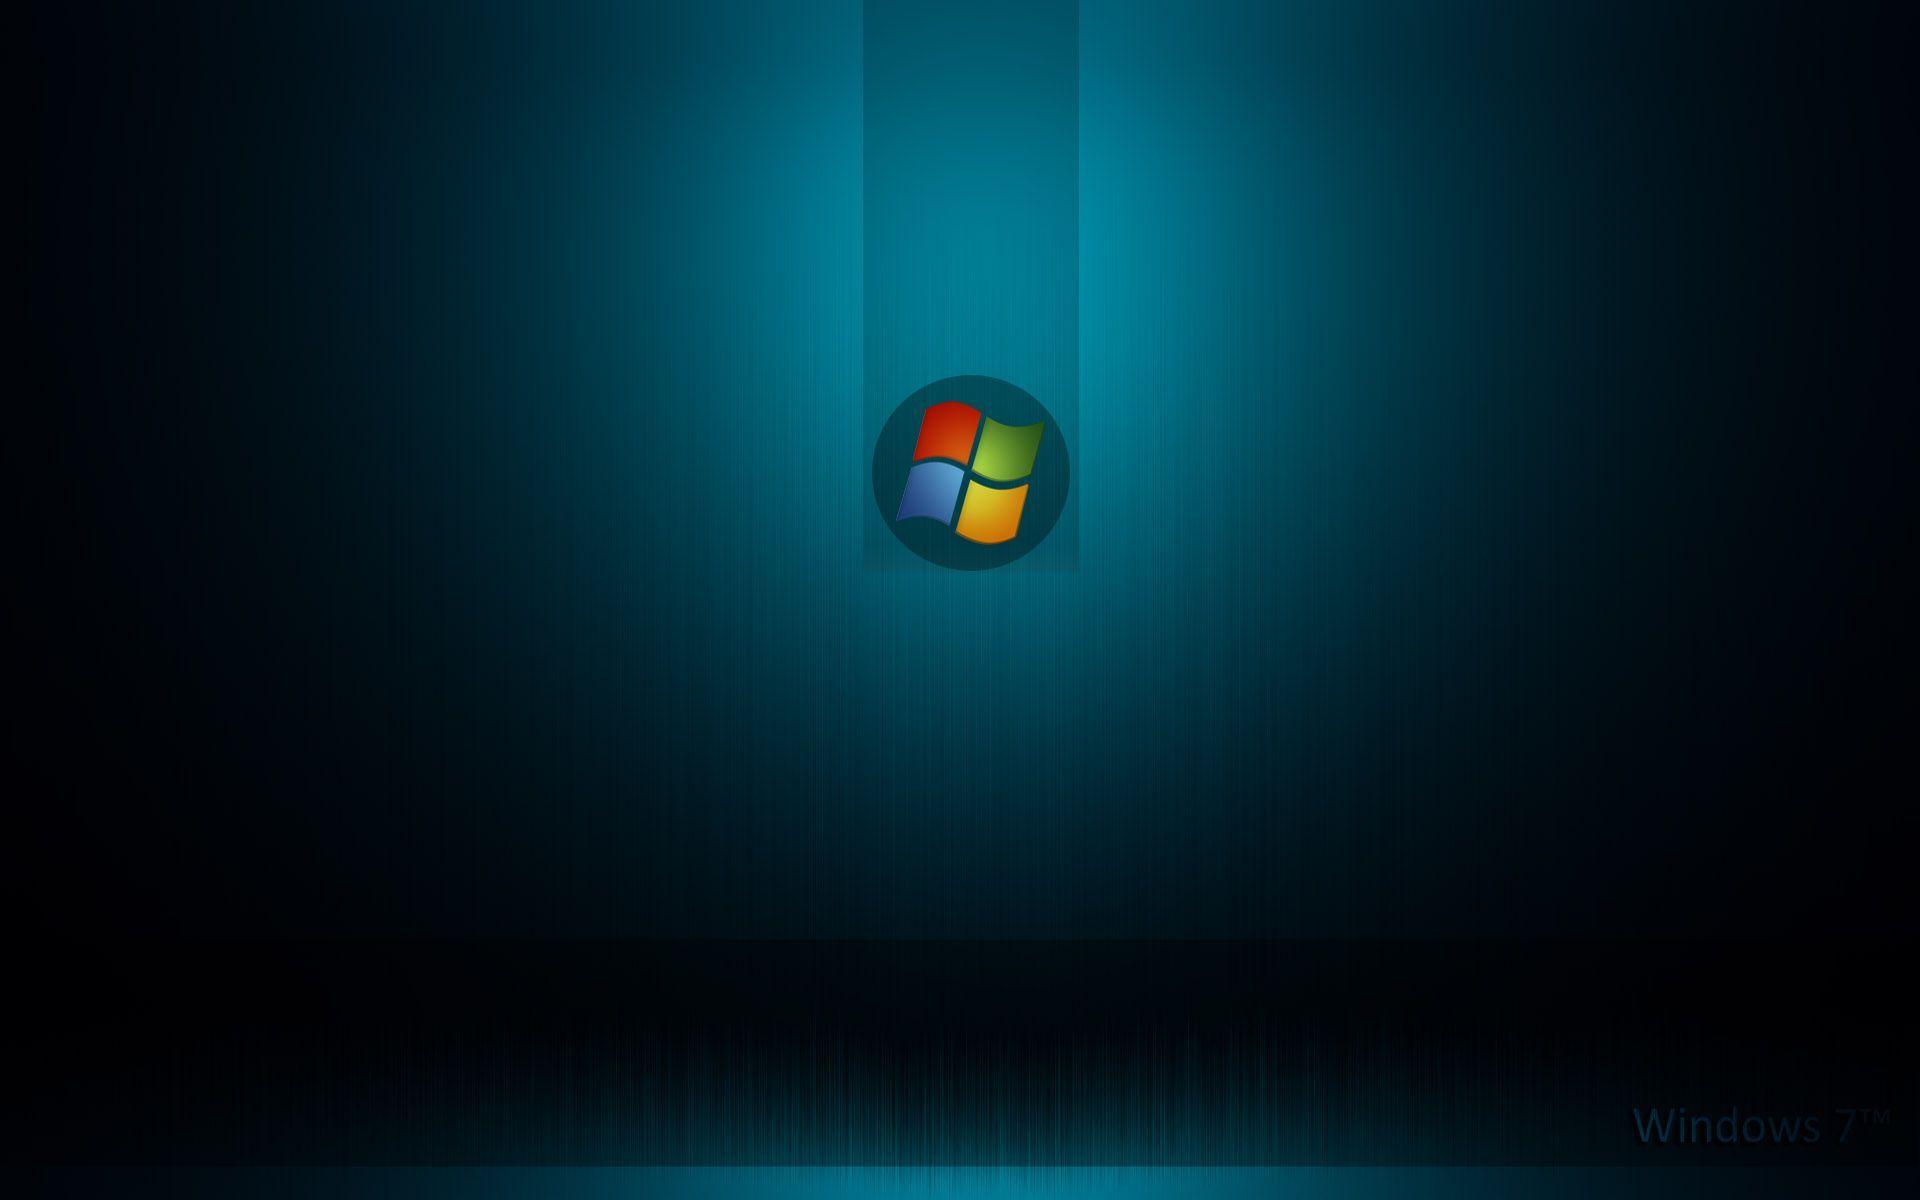 Microsoft Windows 7 wall wallpaper and image